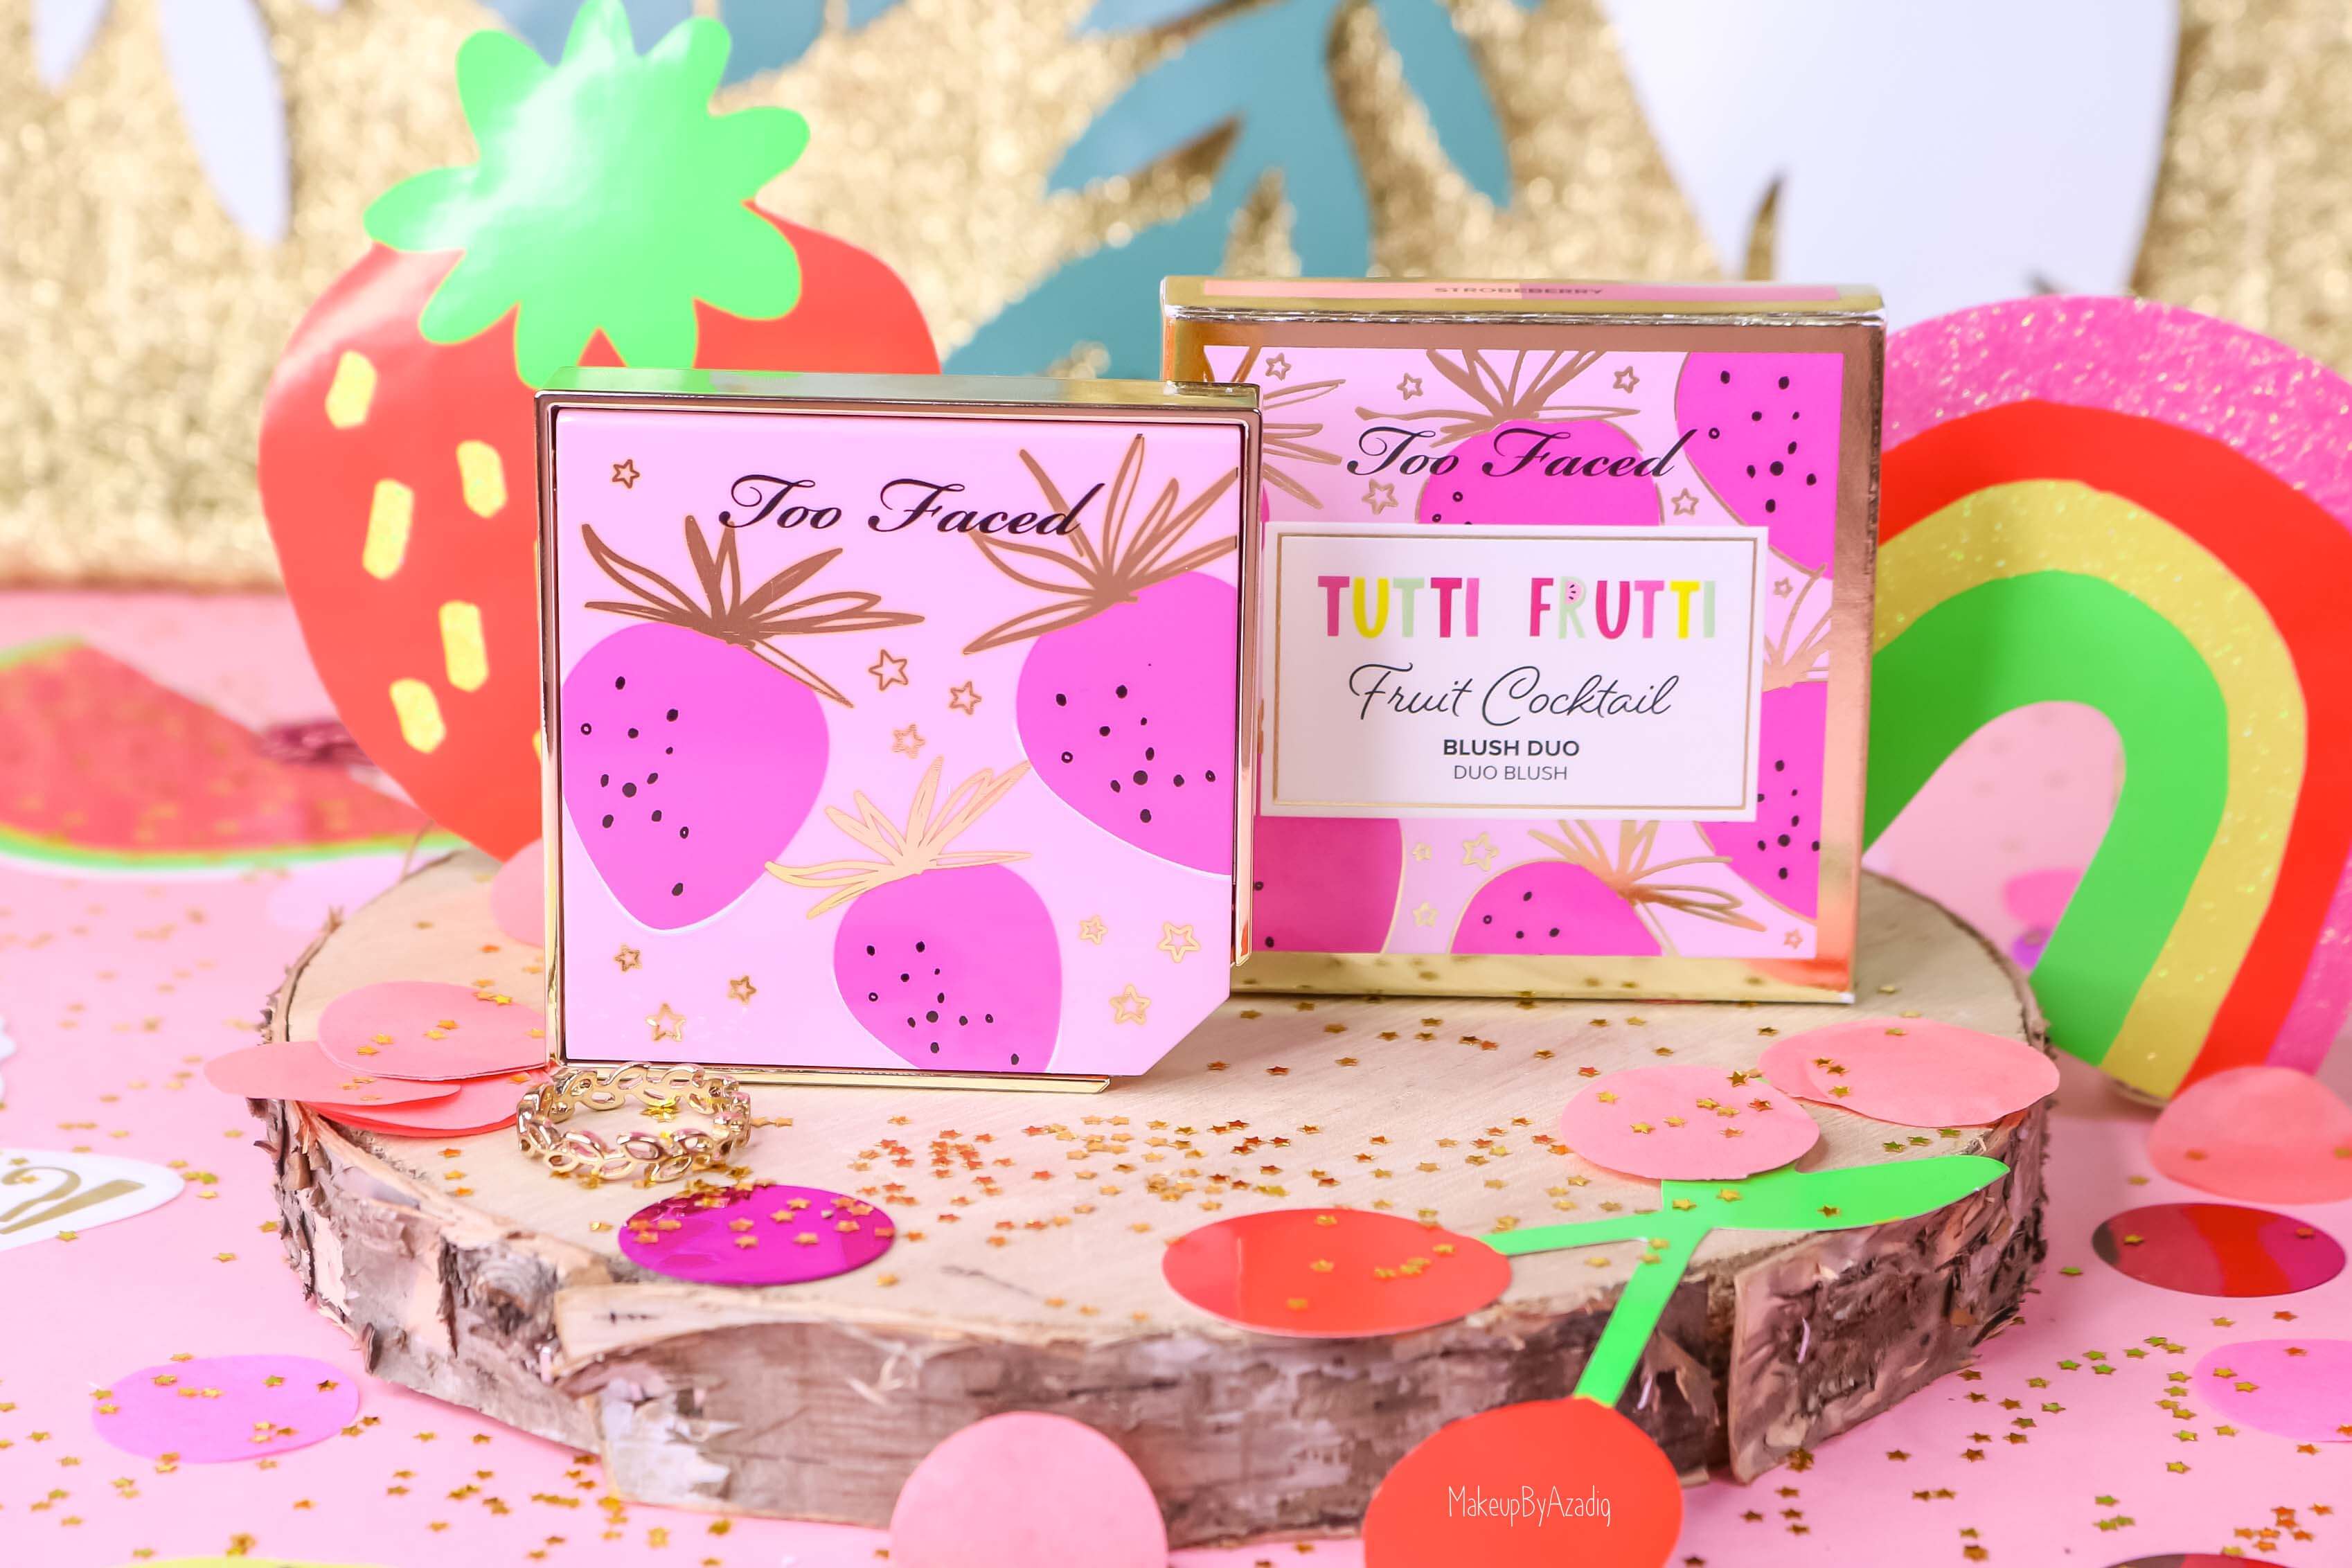 revue-collection-tutti-frutti-too-faced-blush-fruit-cocktail-strobeberry-sephora-france-makeupbyazadig-swatch-avis-prix-rose-duo